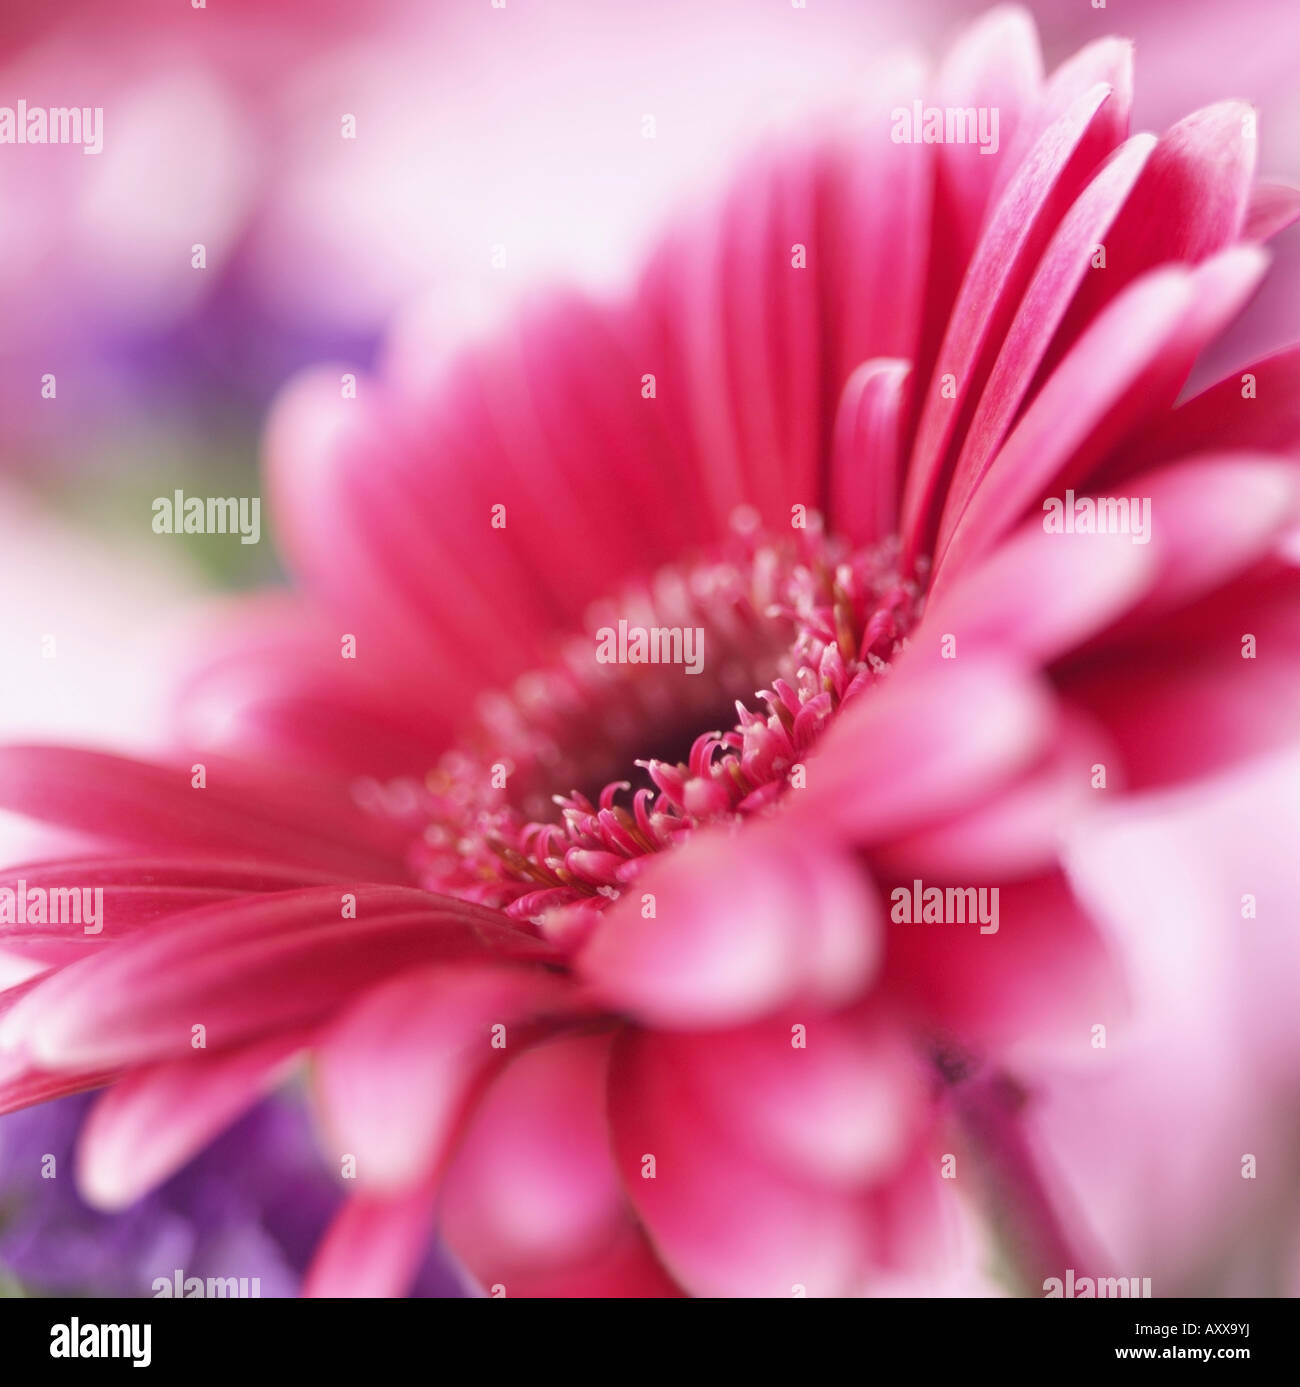 Flower, Plant, Gerbera daisy, Pink petals close up. Stock Photo